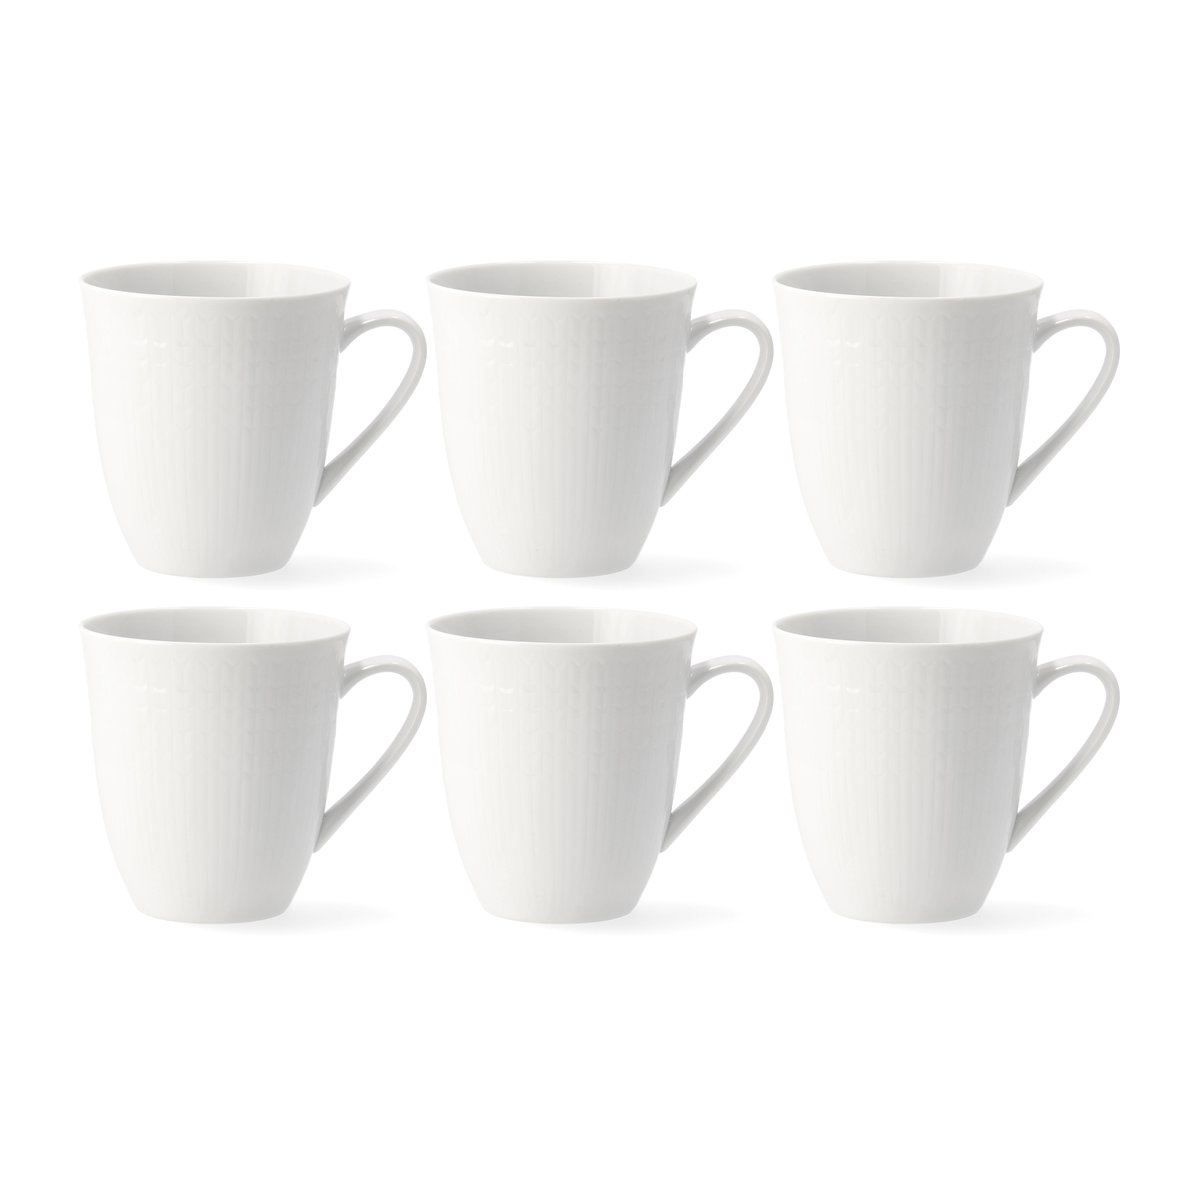 rörstrand mug swedish grace 50 cl, lot de 6 snö (blanc) blanc